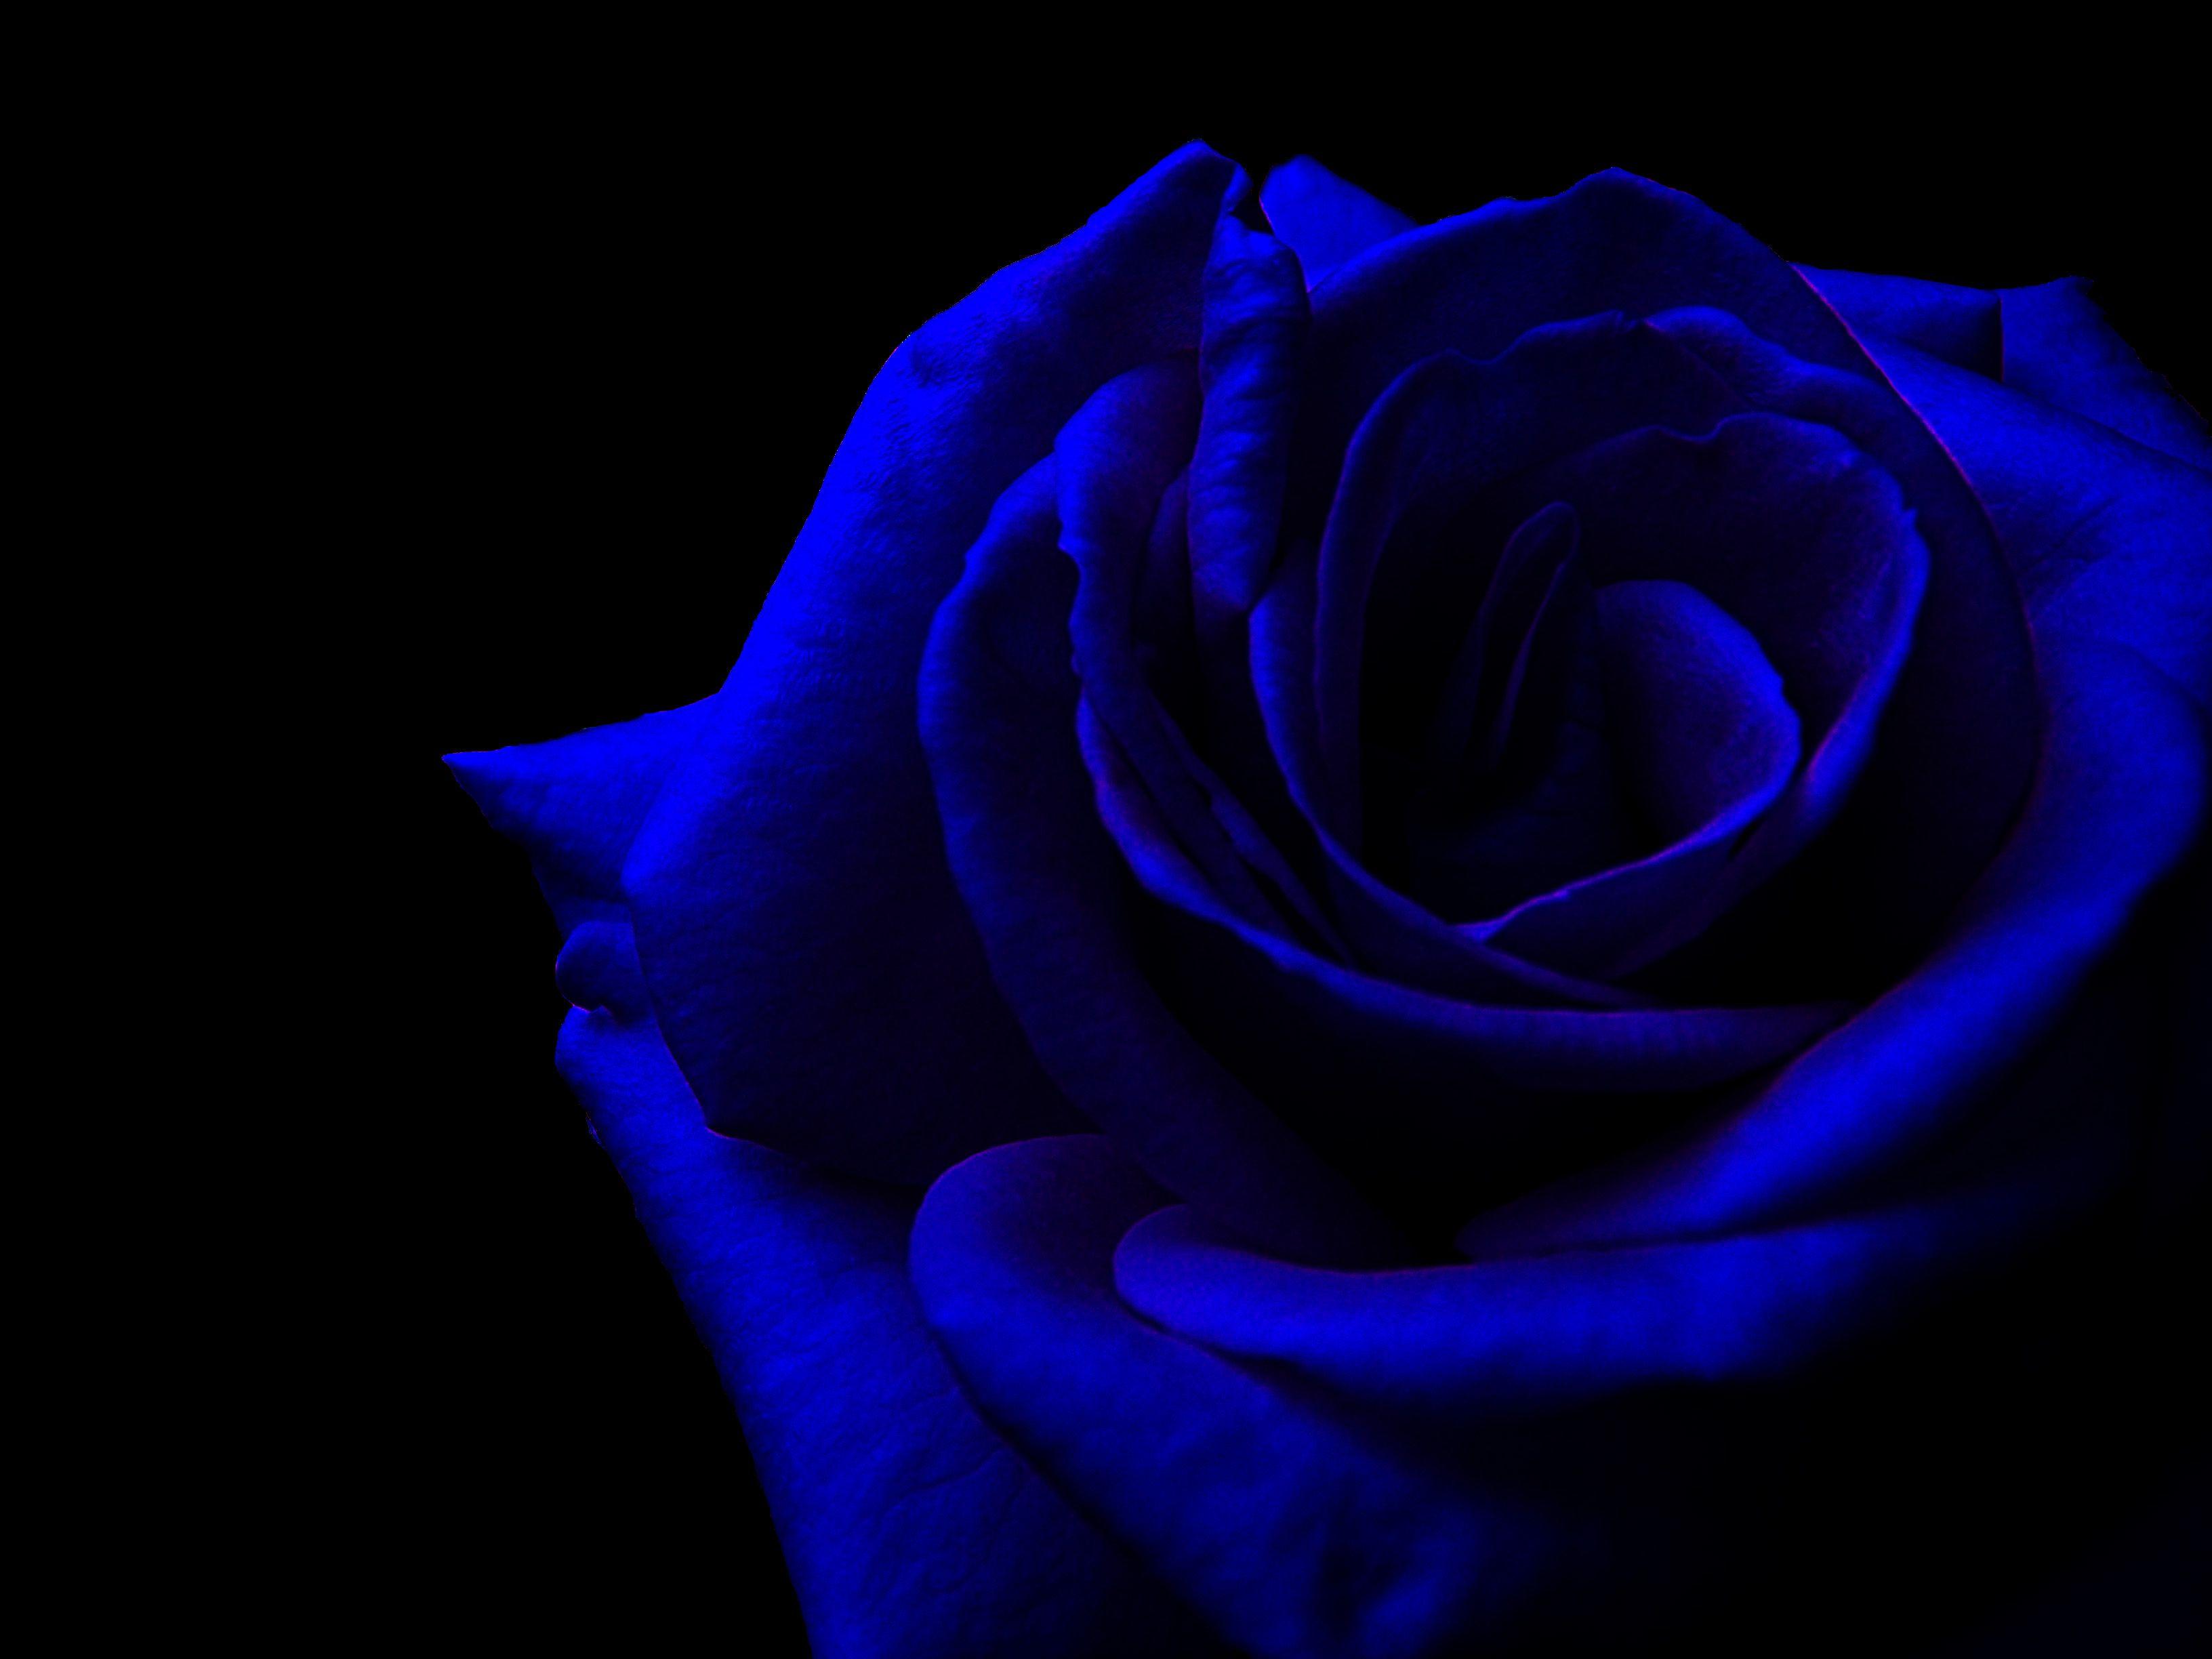 cliserpudo: Black And Blue Rose Wallpaper Image